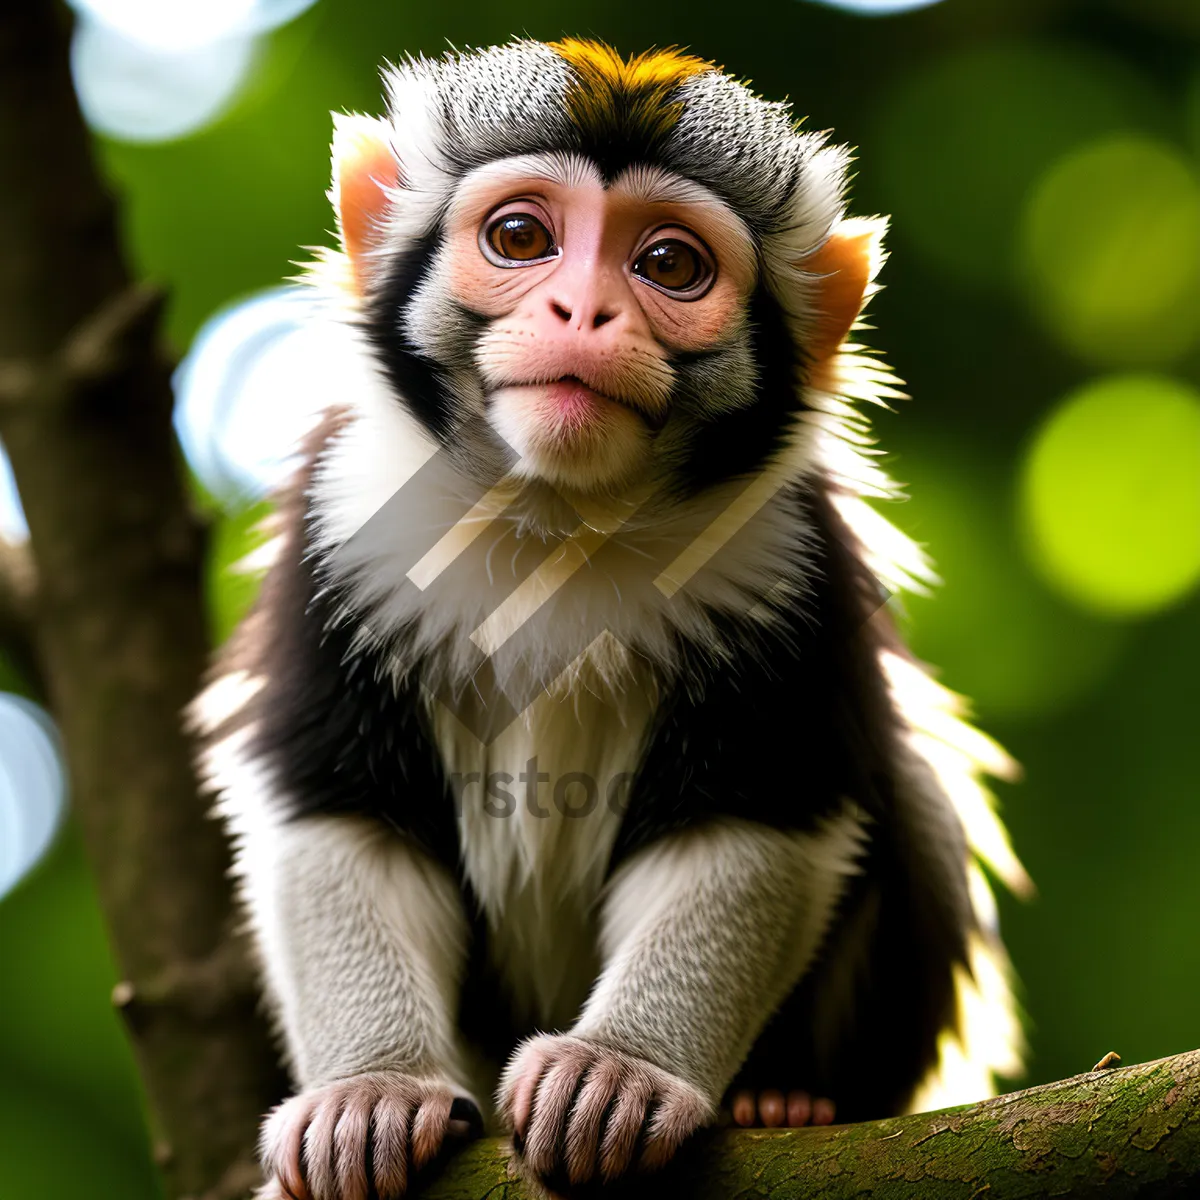 Picture of Cute Primate in the Jungle